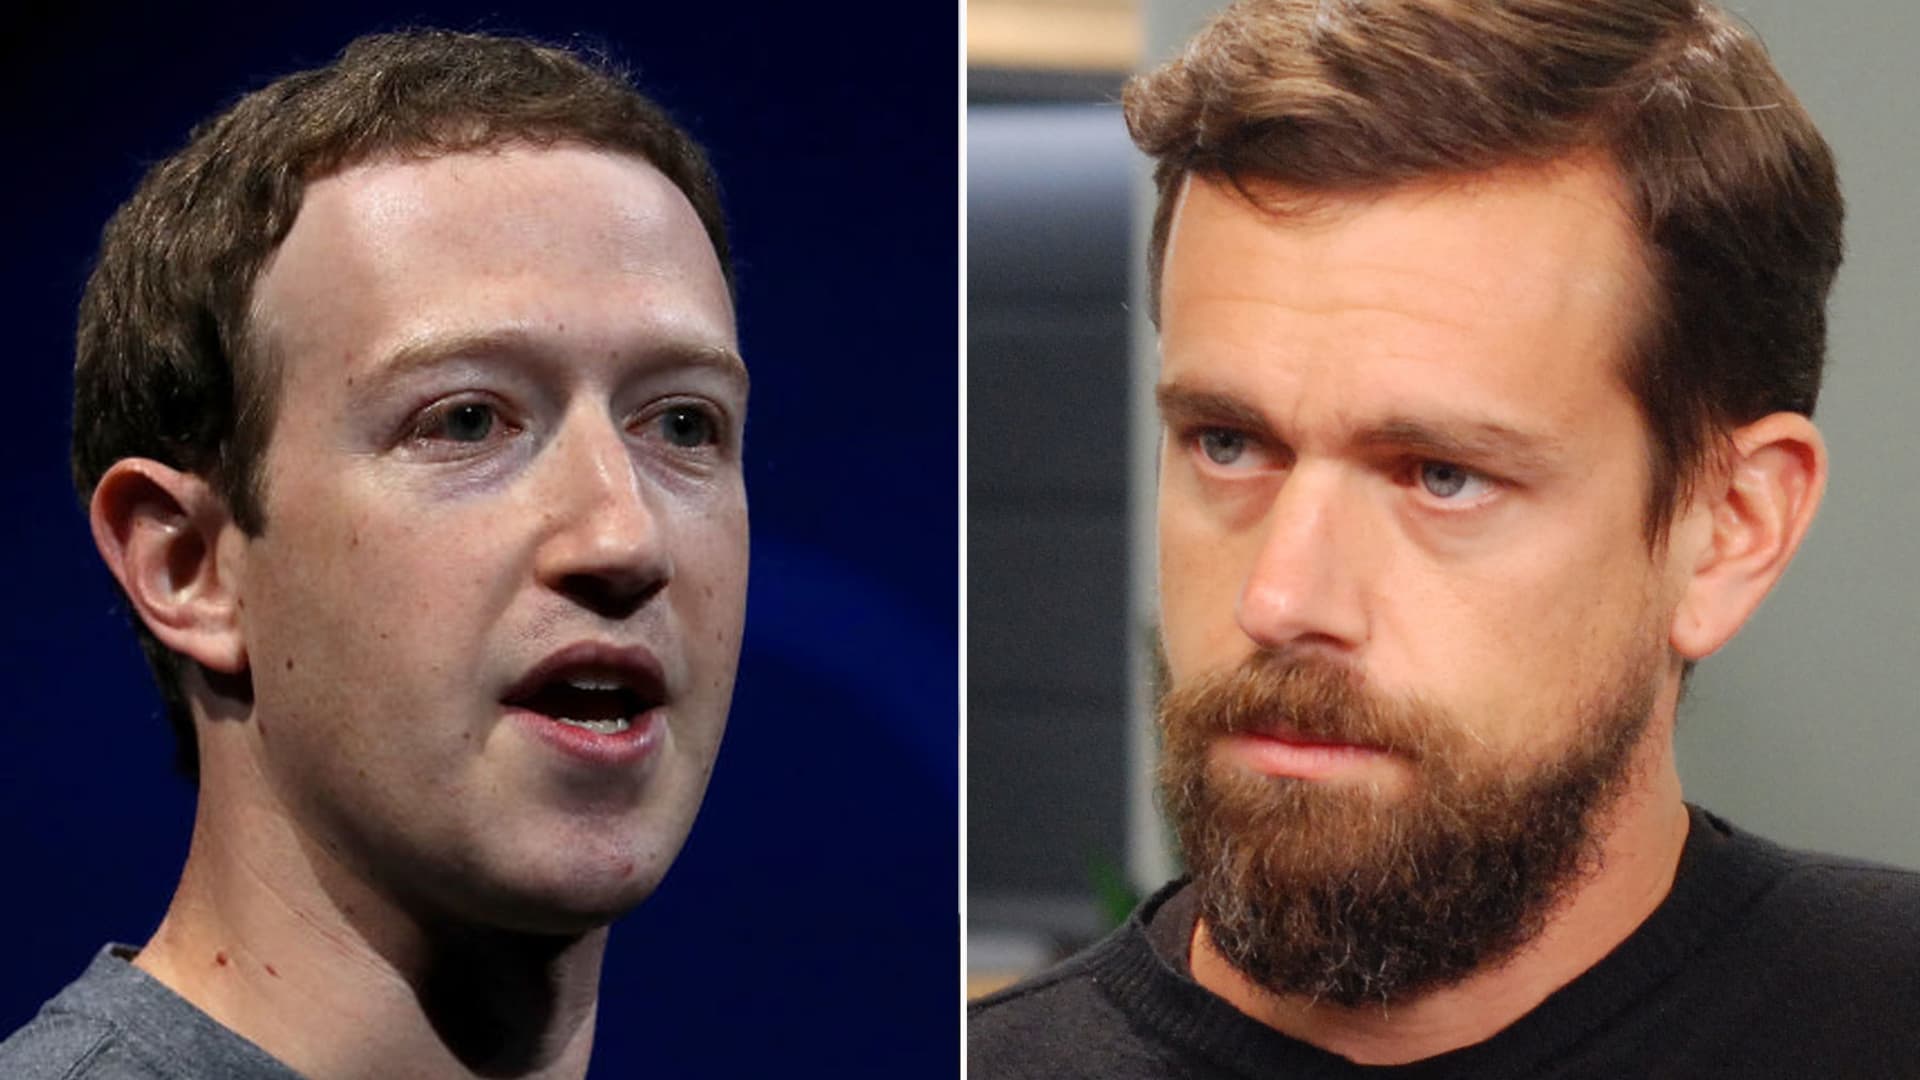 Mark Zuckerberg vs. Jack Dorsey is the most interesting battle in Silicon Valley